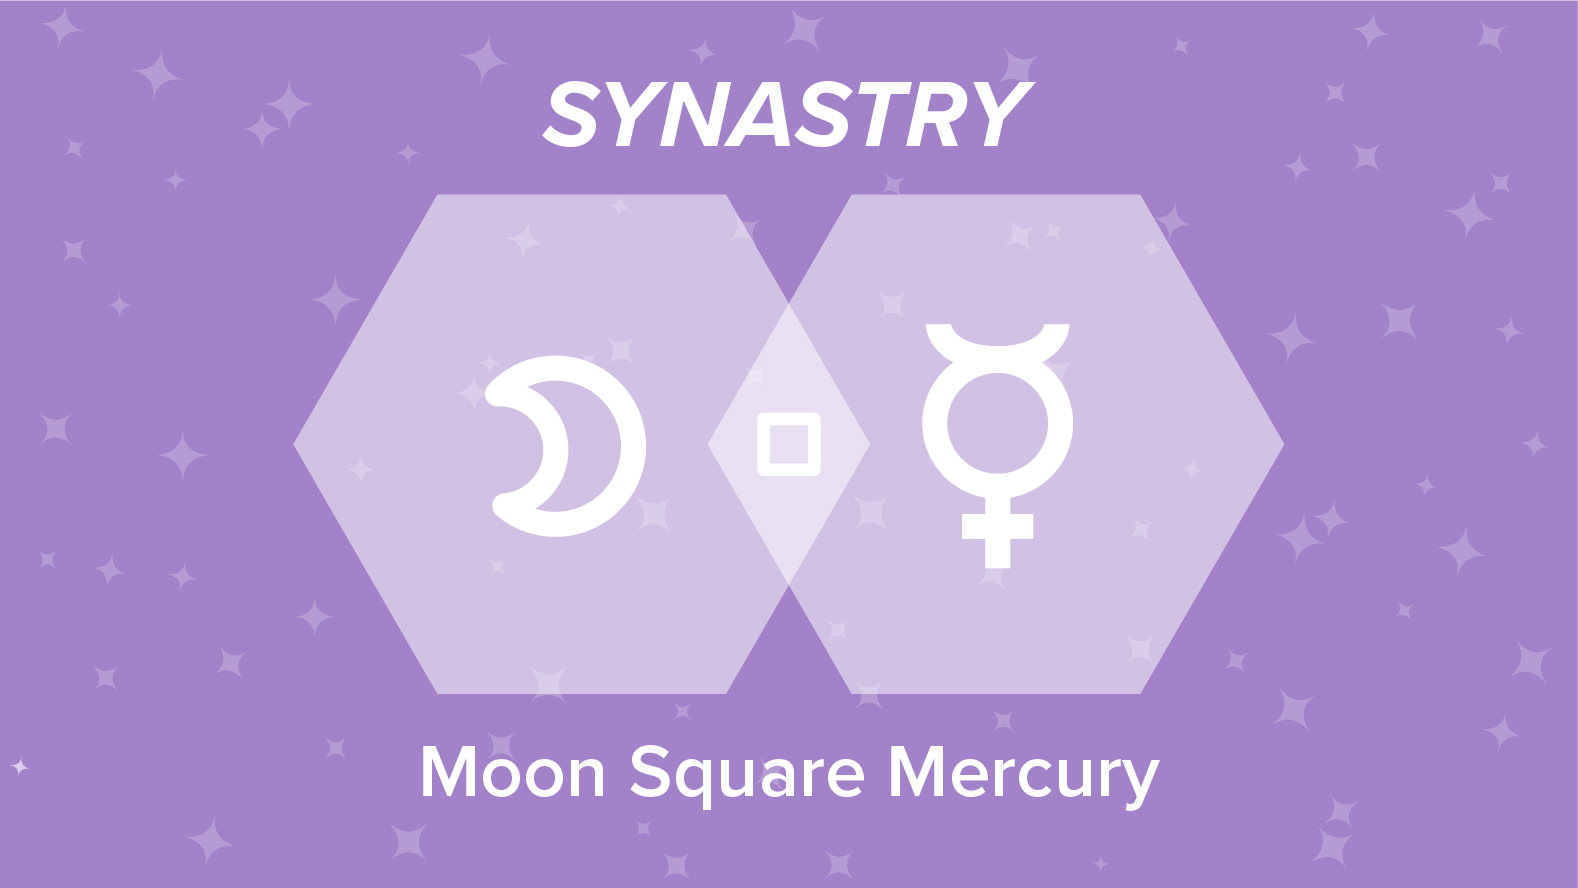 Moon Square Mercury Synastry